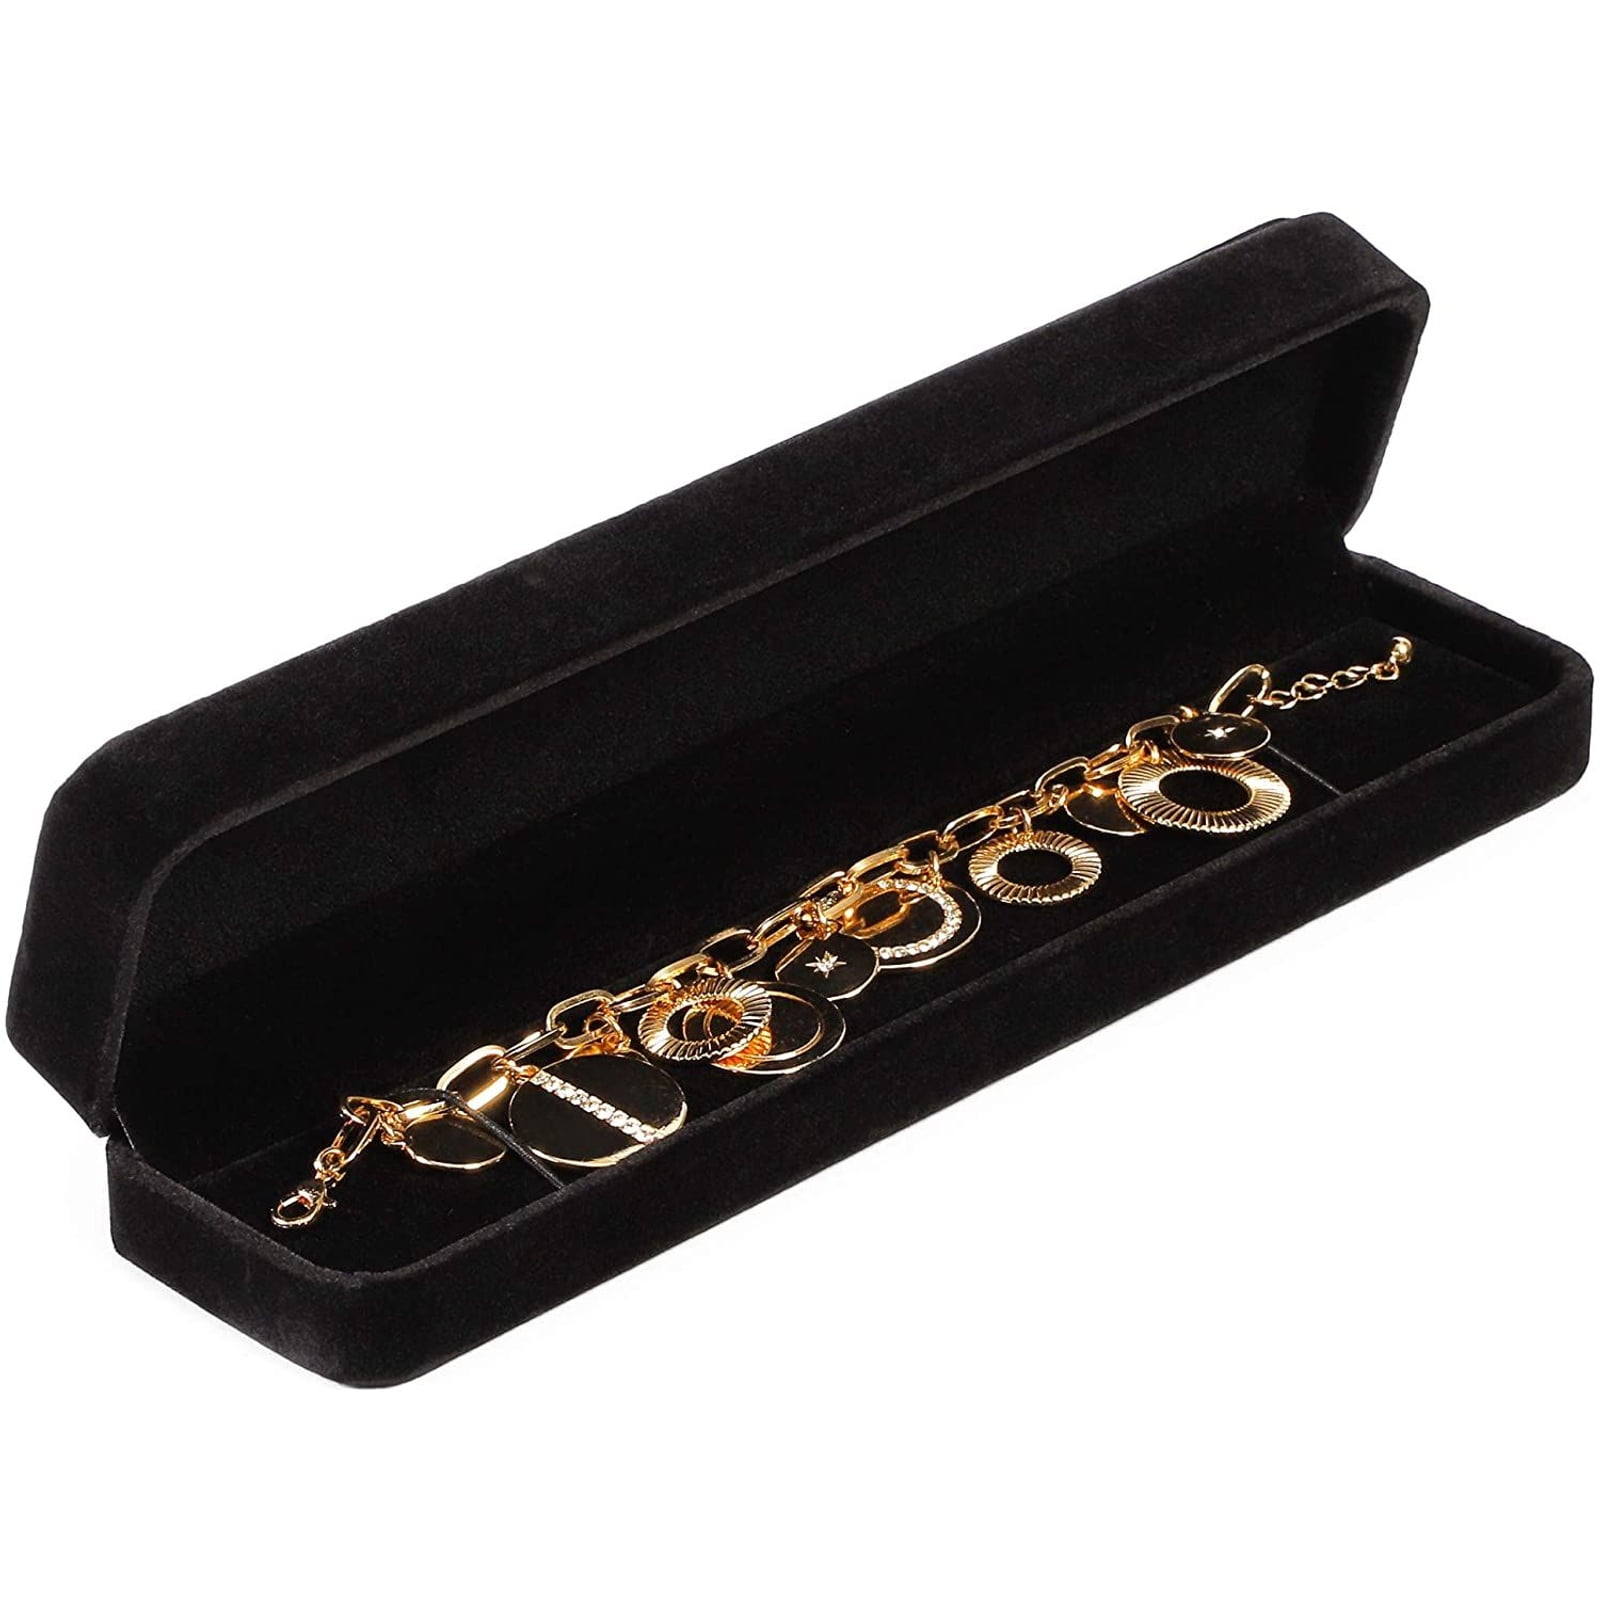 6 PCs High Quality Black Velvet Ring Gift Square Box Case Jewelry Display 